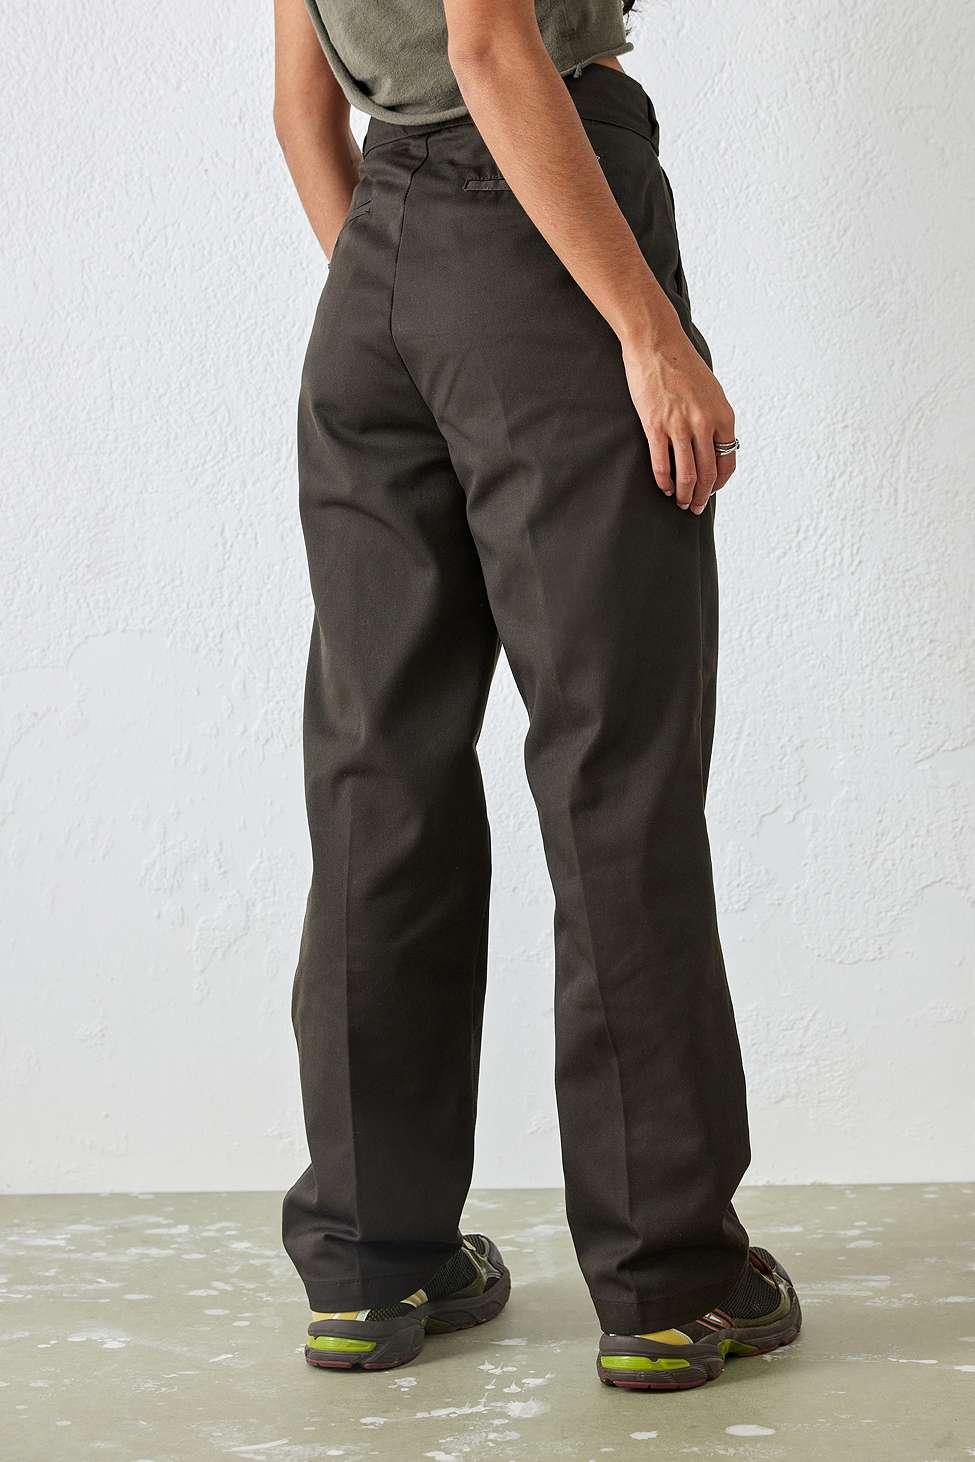 Dickies 874 Original Fit Work Pants in Brown  FallenFront